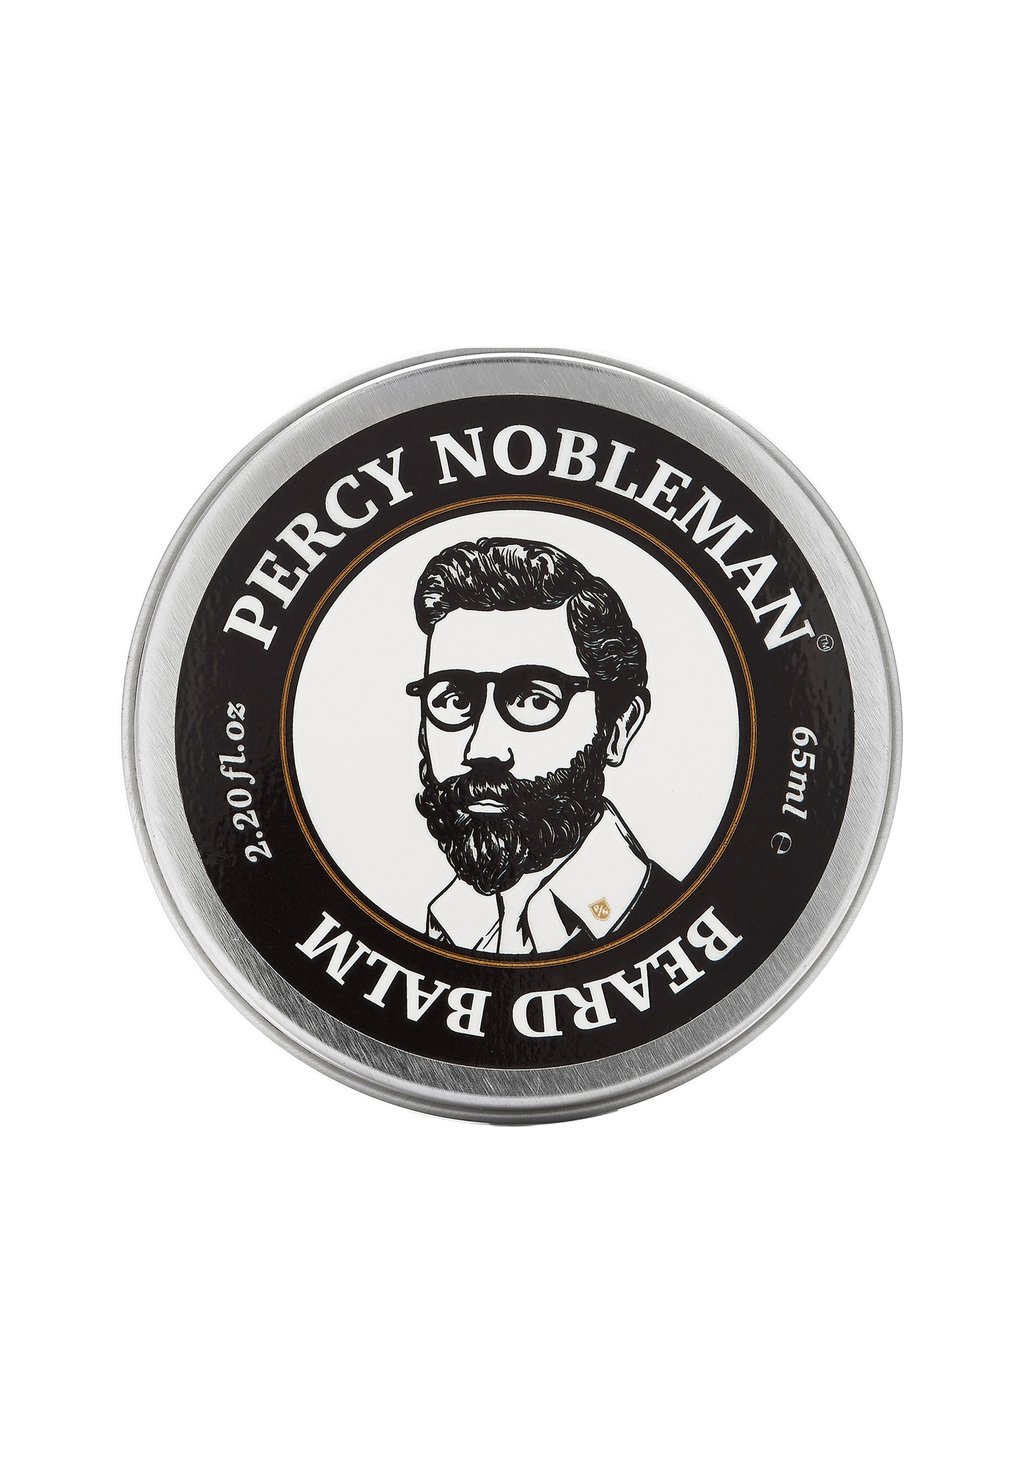 Уход за бородой BEARD BALM Percy Nobleman уход за бородой beard oil percy nobleman цвет original fragrance free